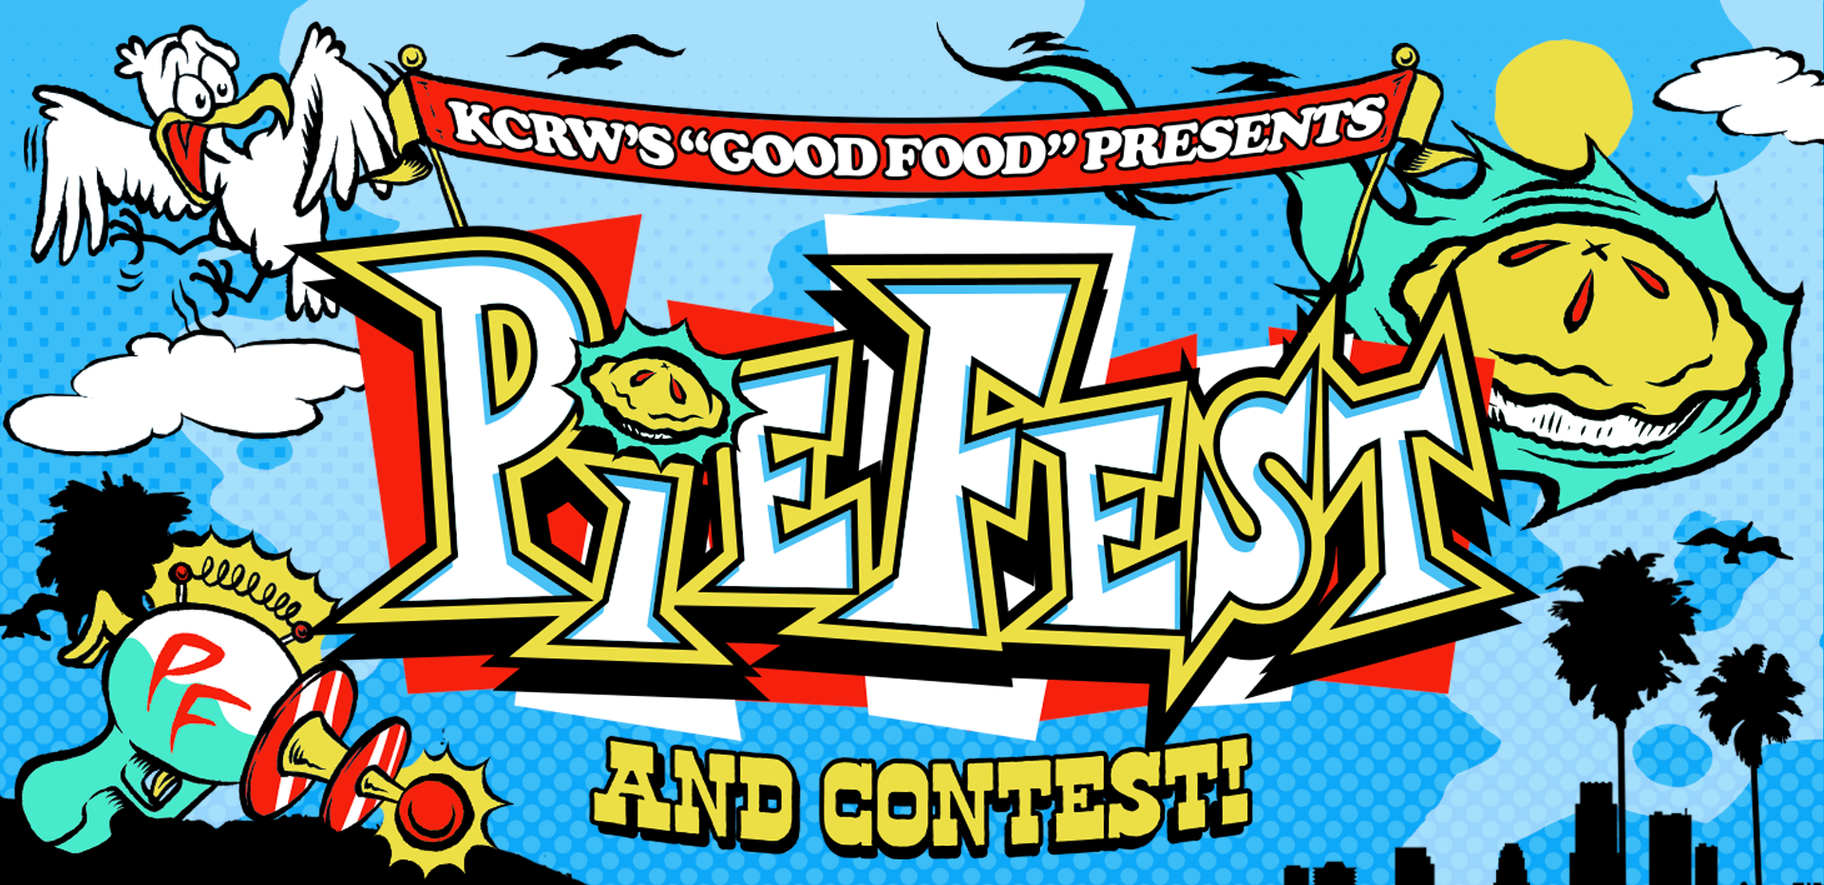 KCRW’s Good Food PieFest & Contest